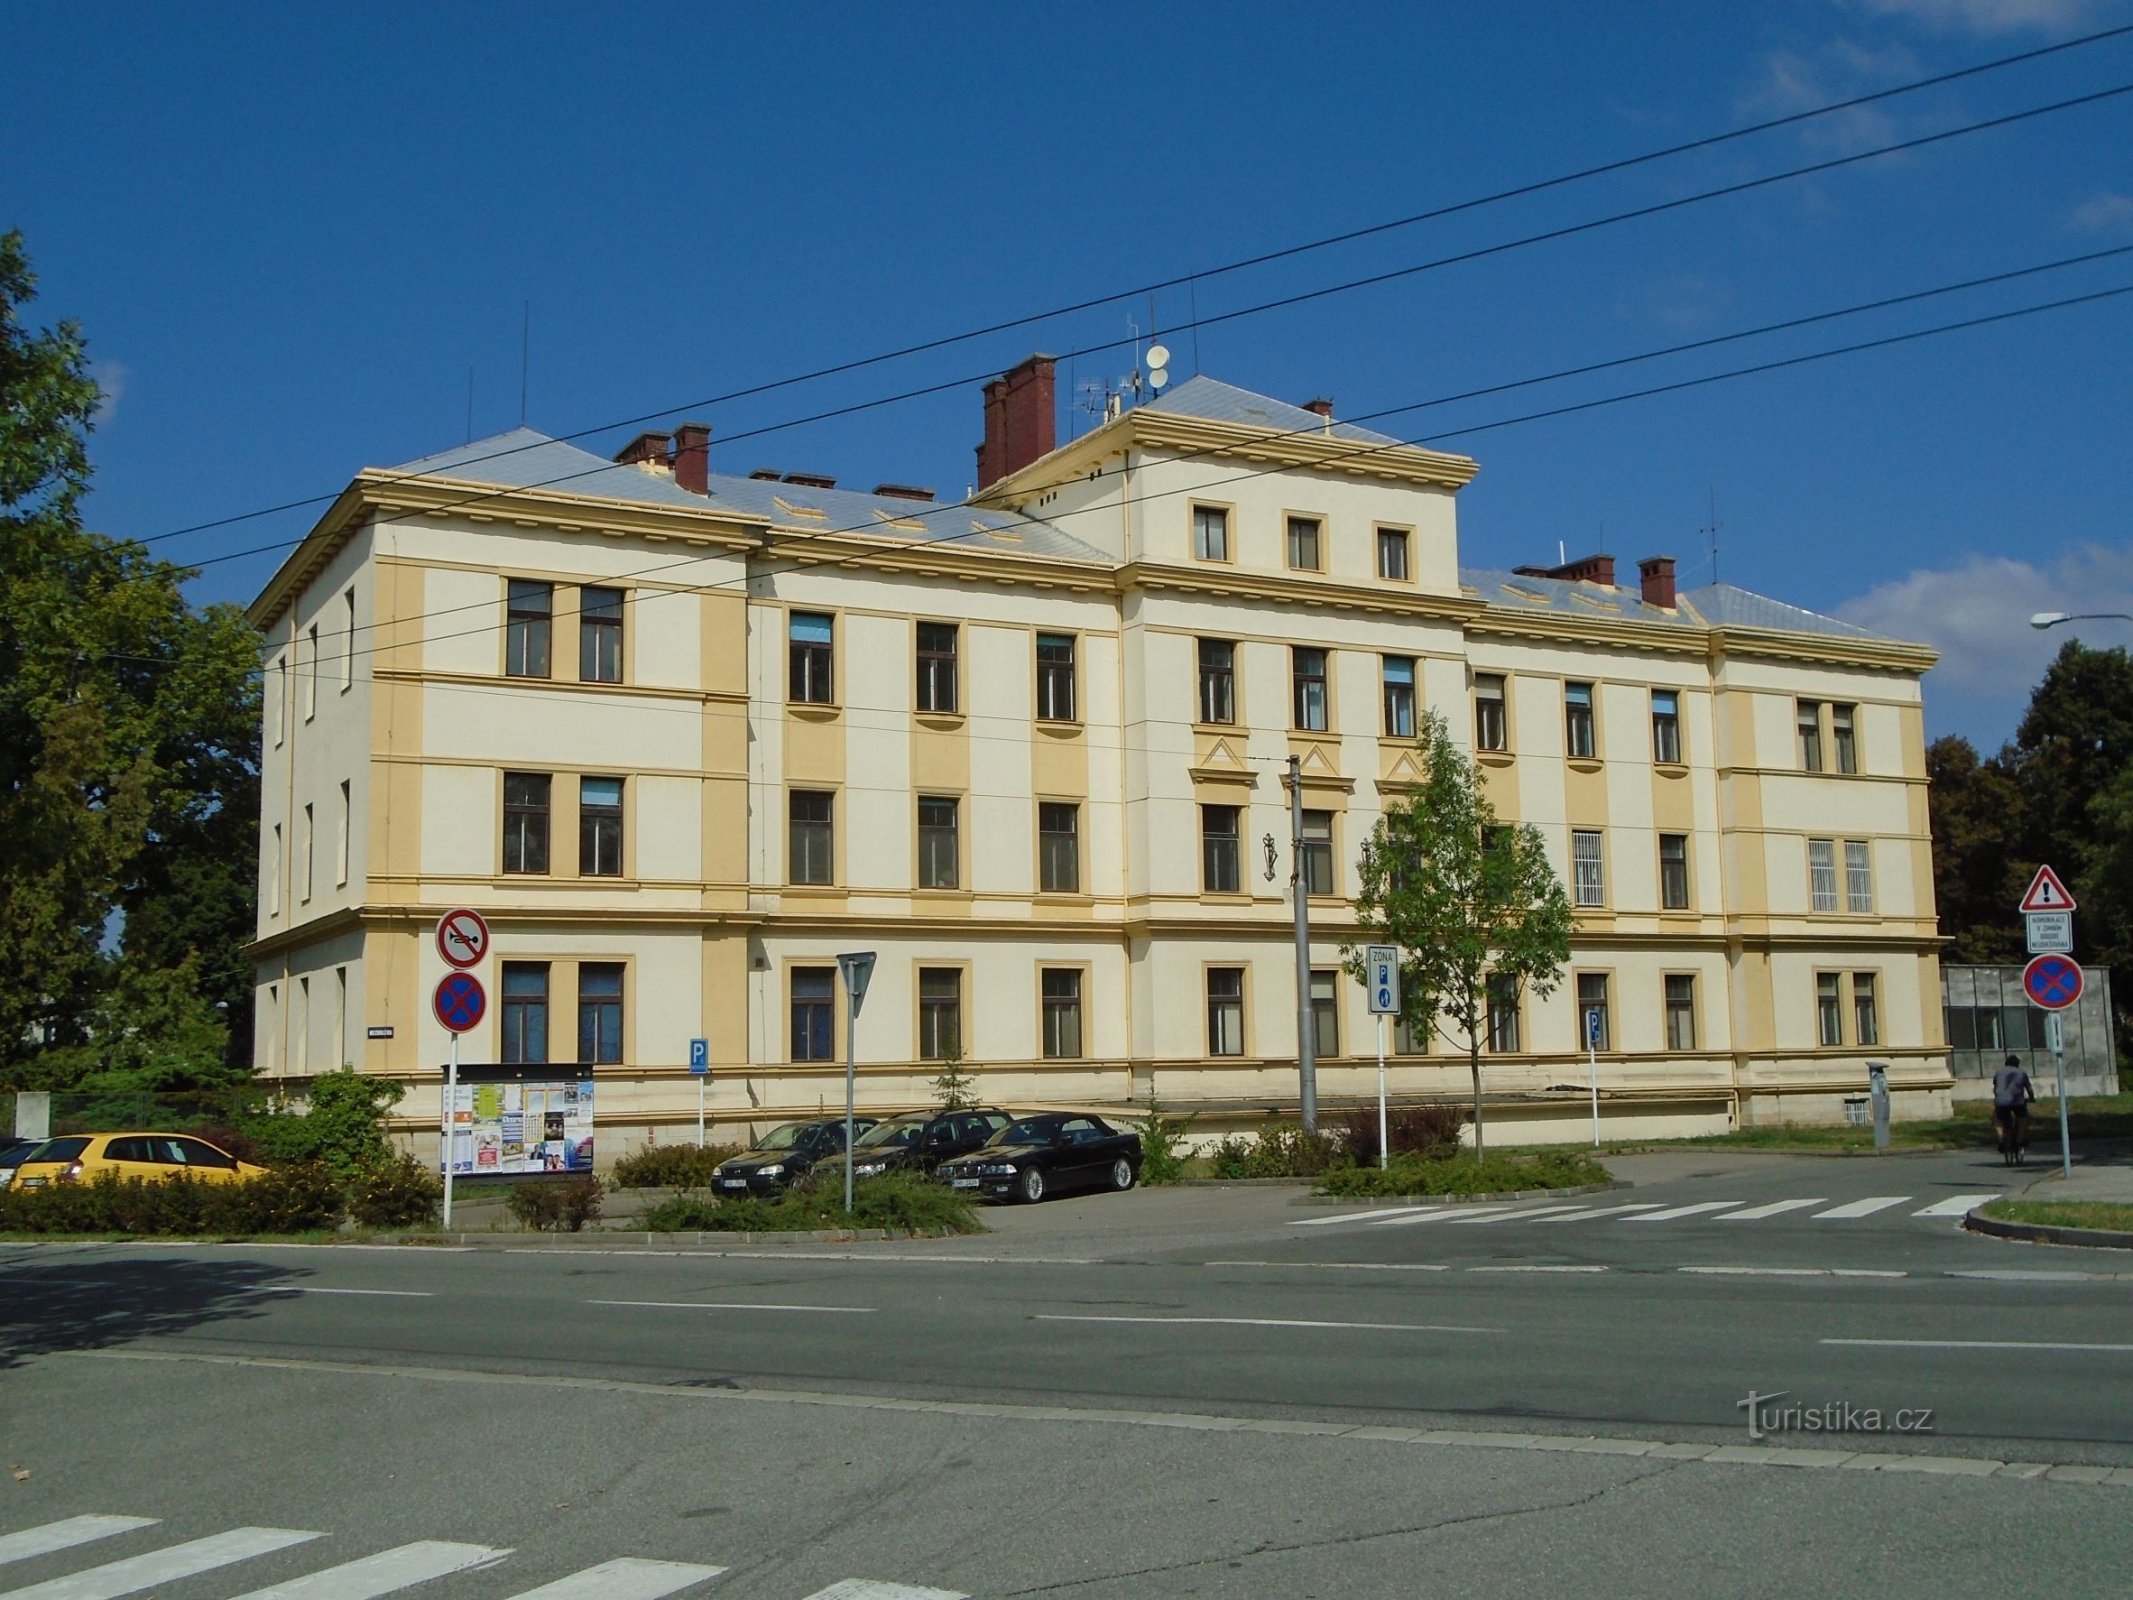 Old Hospital (Hradec Králové, April 2.9.2018, XNUMX)